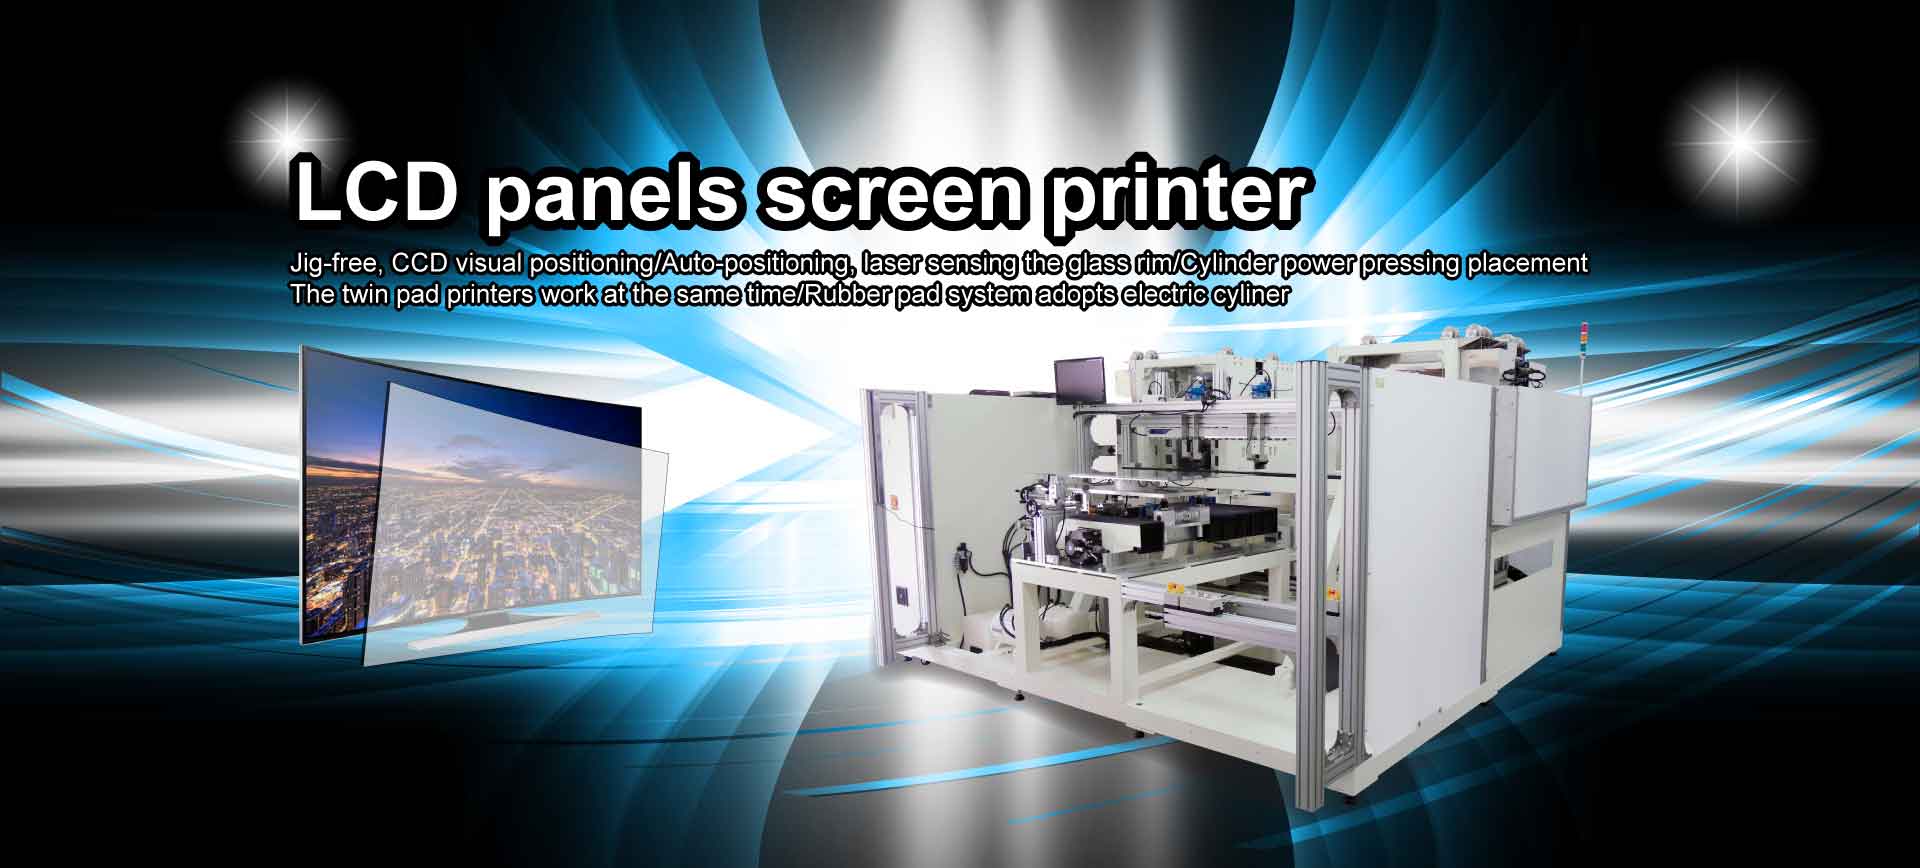 LCD panels screen printer